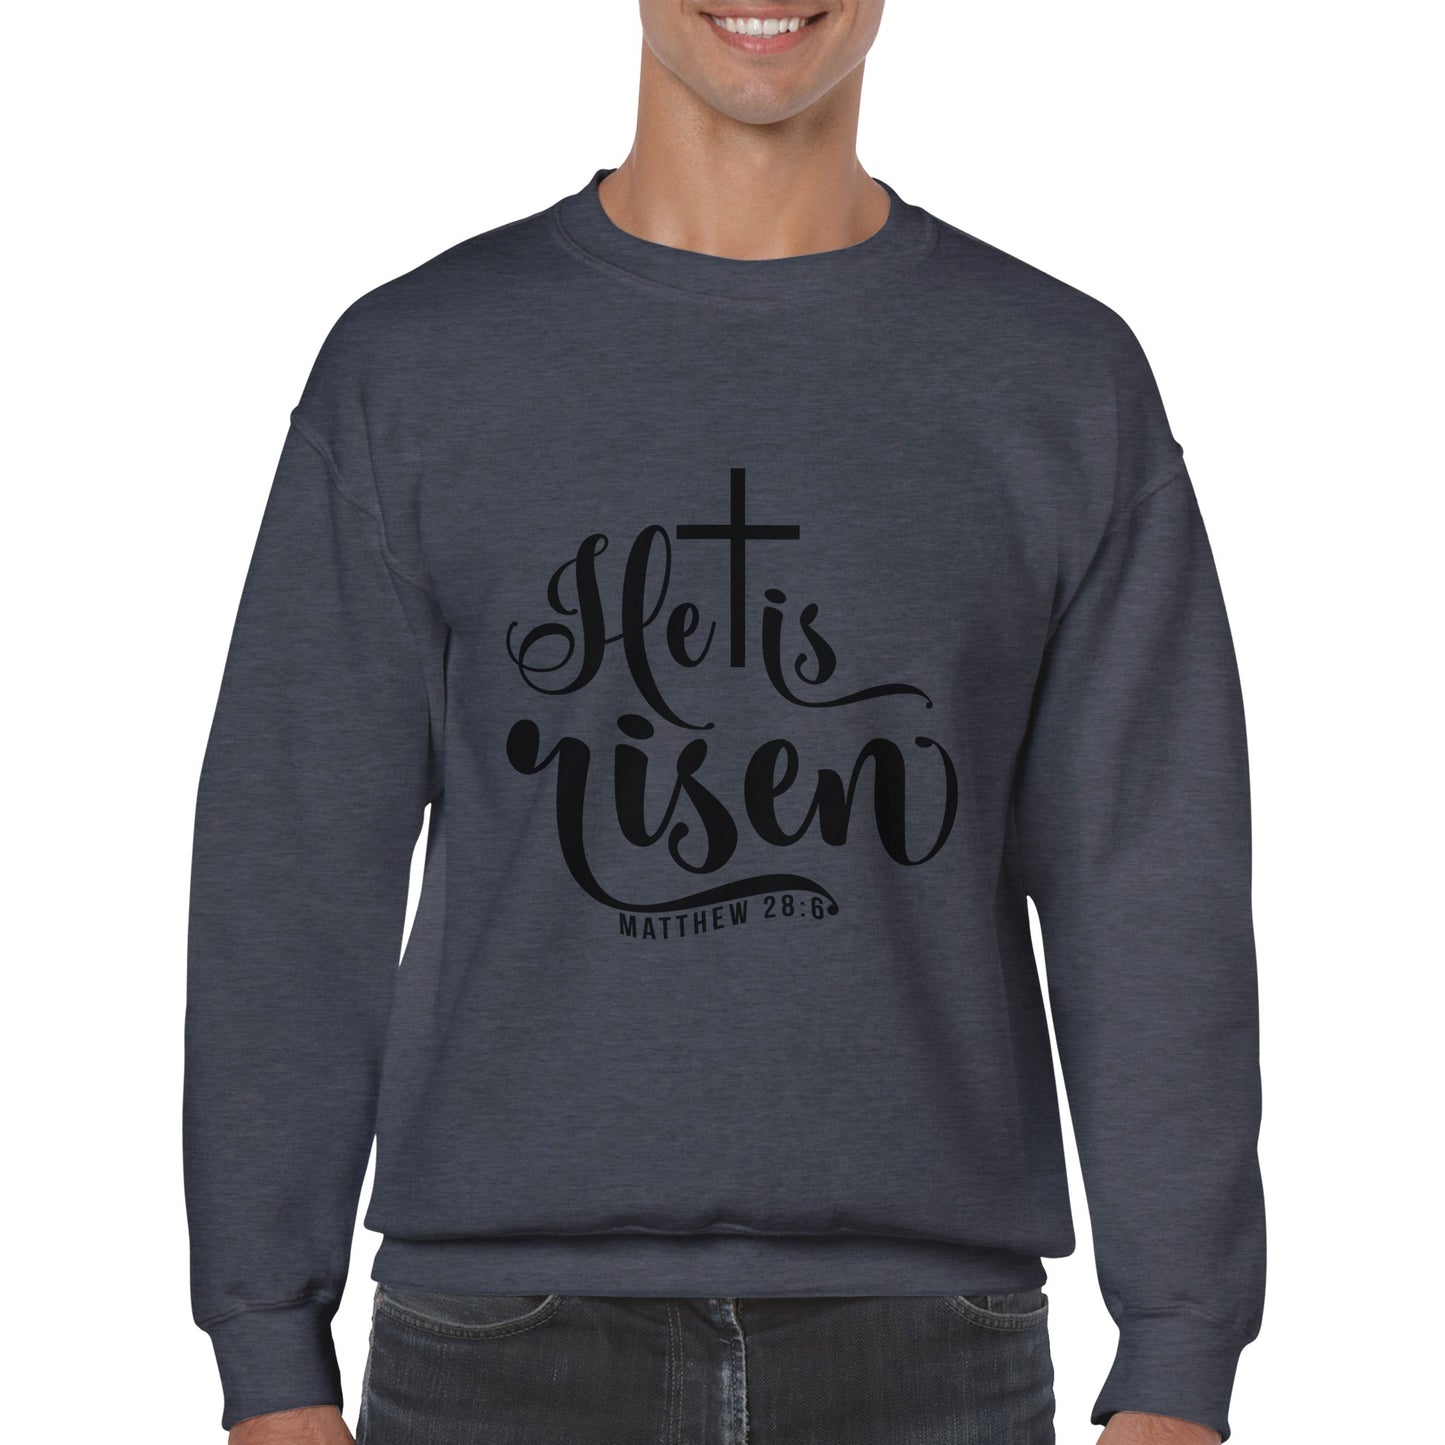 He is Risen (Matthew 20:6) - Classic Unisex Crewneck Sweatshirt